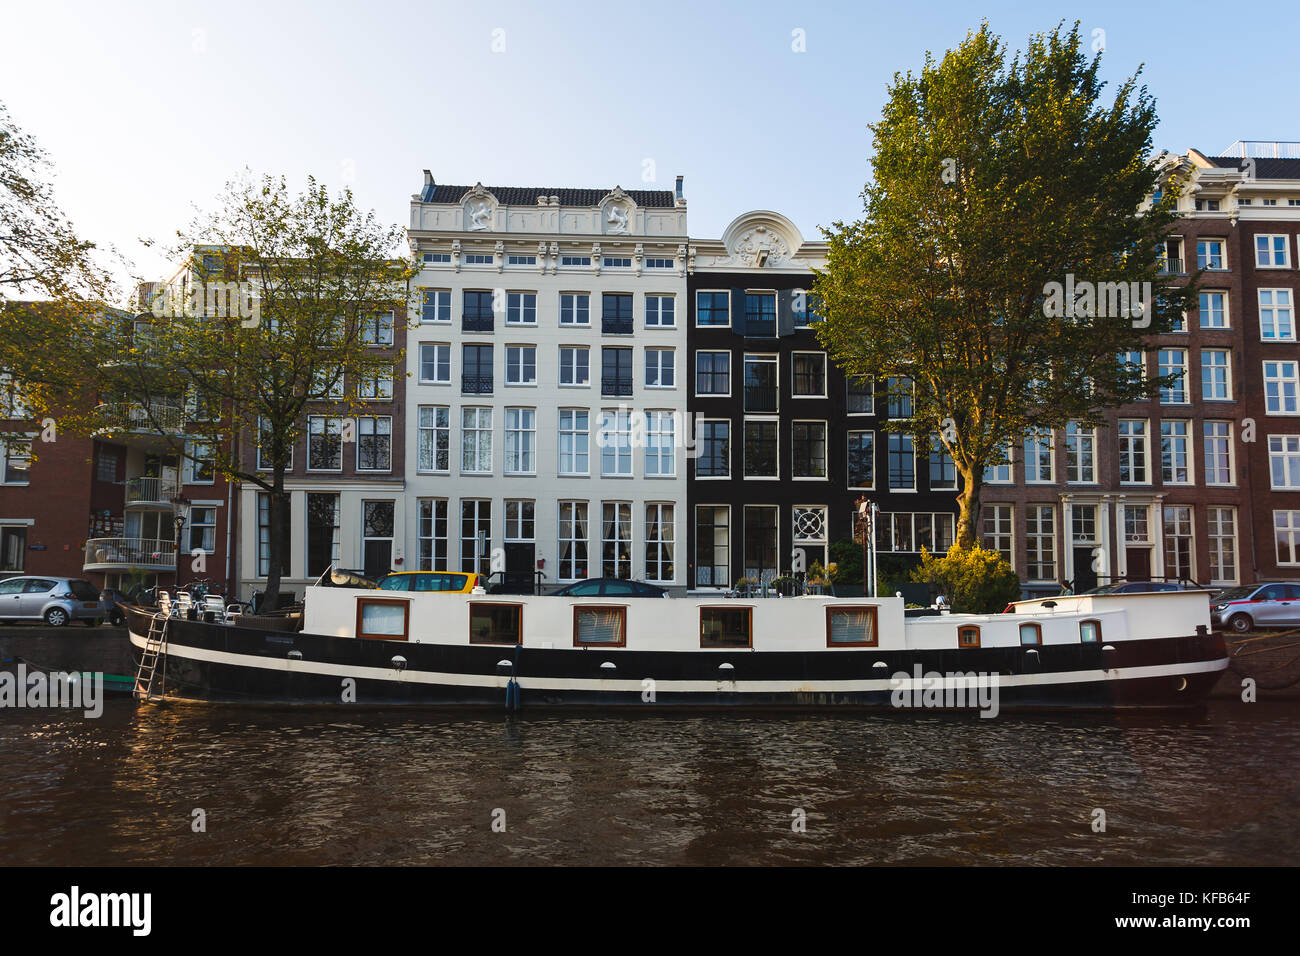 Holz- Floating House auf dem Wasser in Amsterdam, Herbst Stockfoto